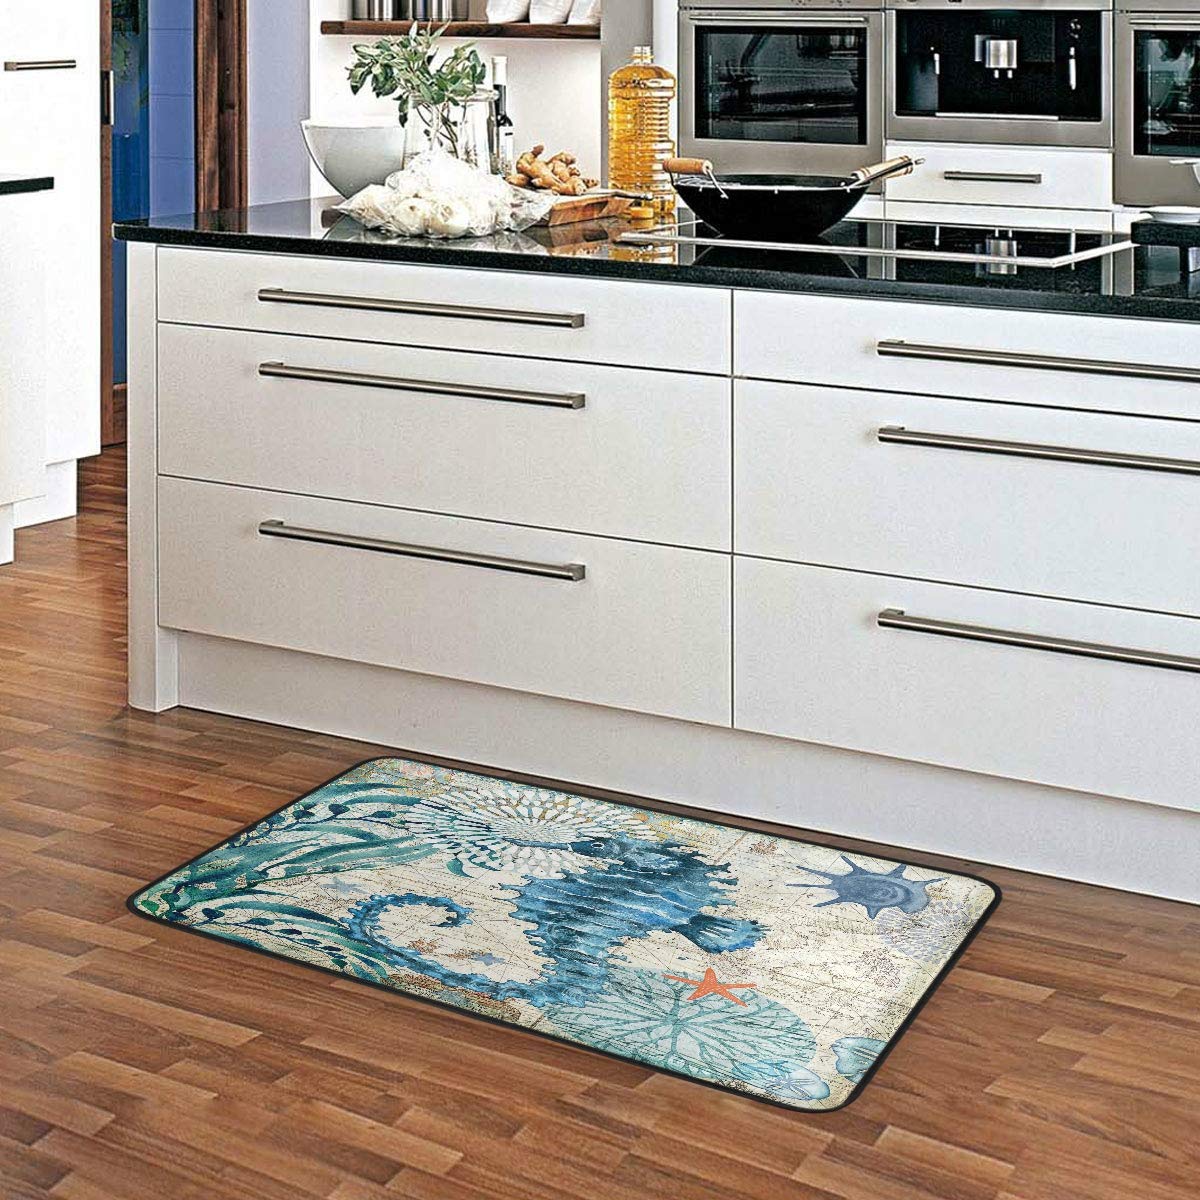 Kitchen Rugs Watercolor Blue Seahorse Design Non-Slip Soft Kitchen Mats Bath Rug Runner Doormats Carpet for Home Decor, 39" X 20"